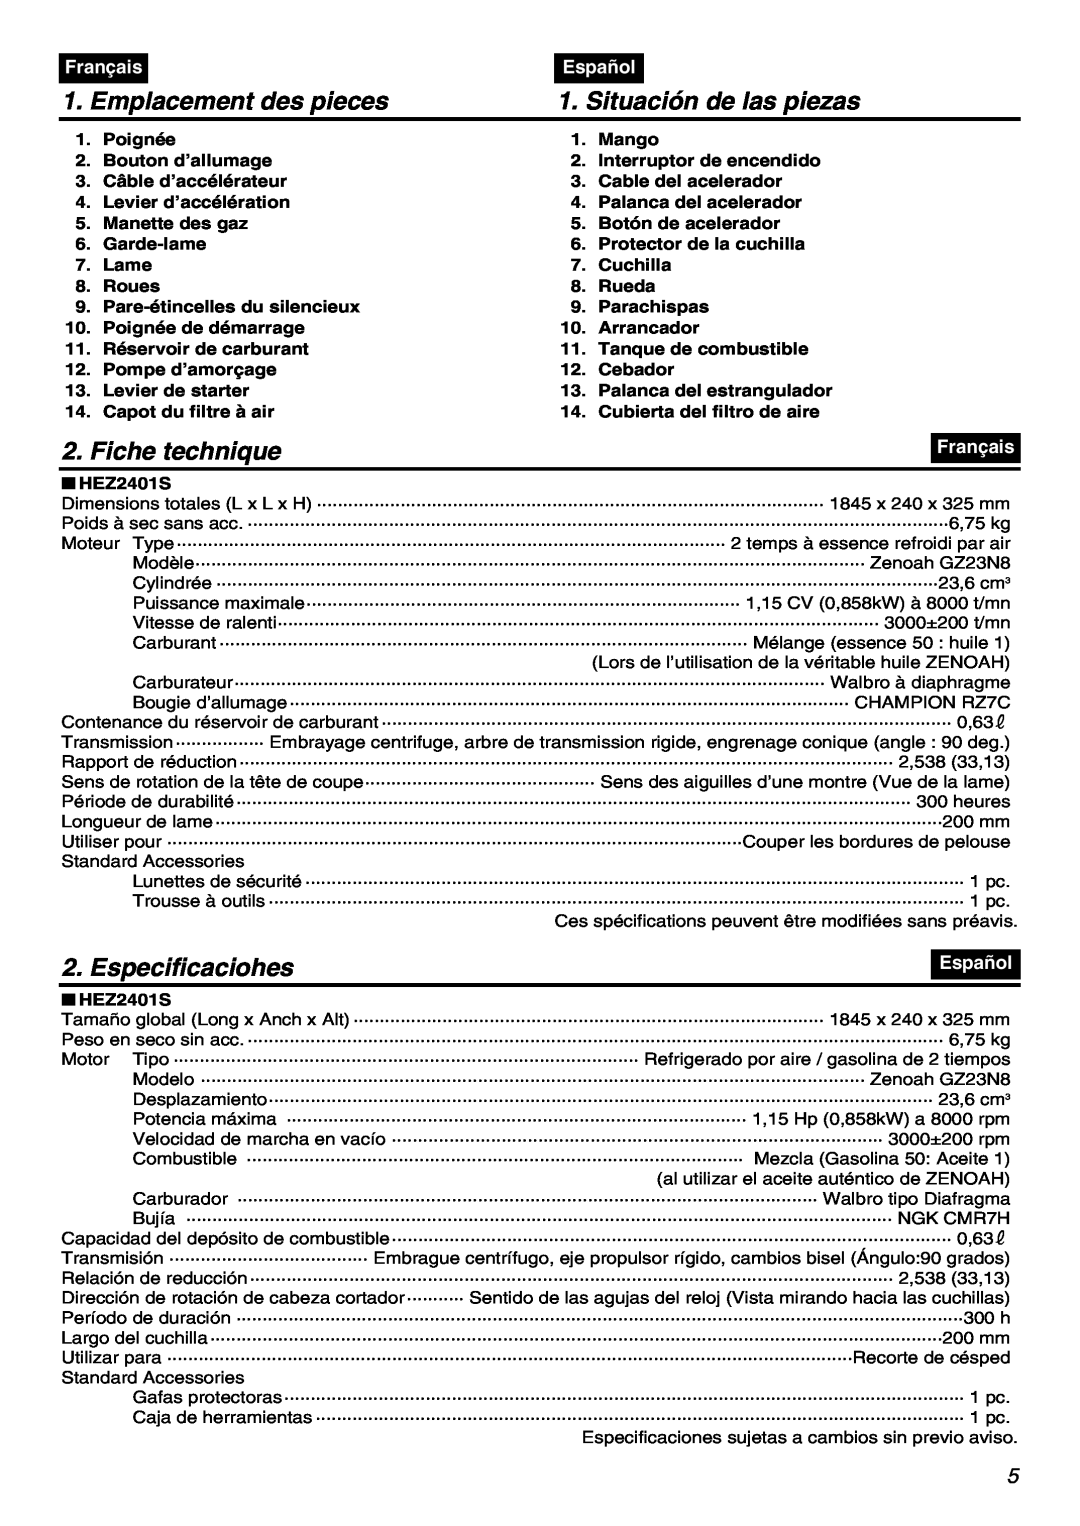 RedMax HEZ2401S Emplacement des pieces, Situación de las piezas, Fiche technique, Especificaciohes, Français, Español 